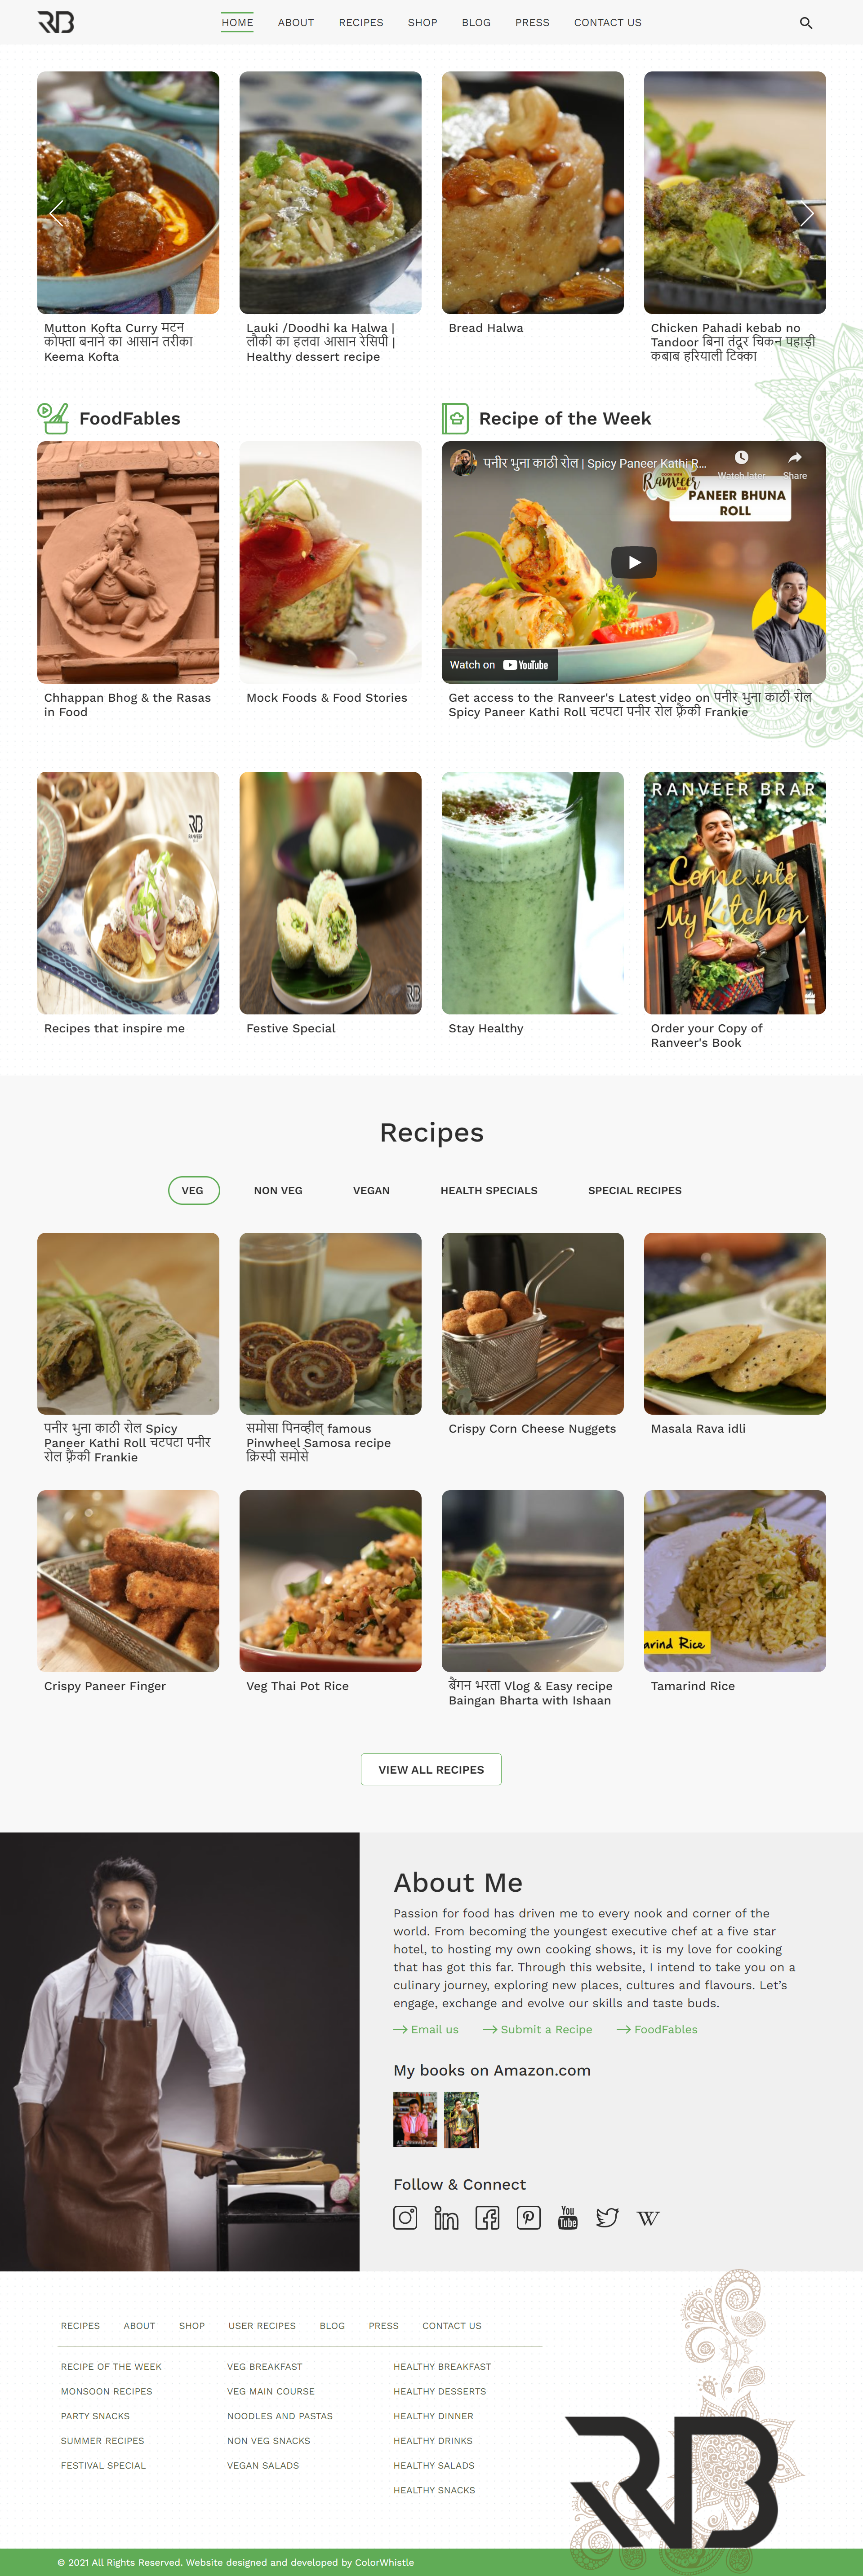 Home Page Design - Celebrity Chef Website Design & Development Using WordPress